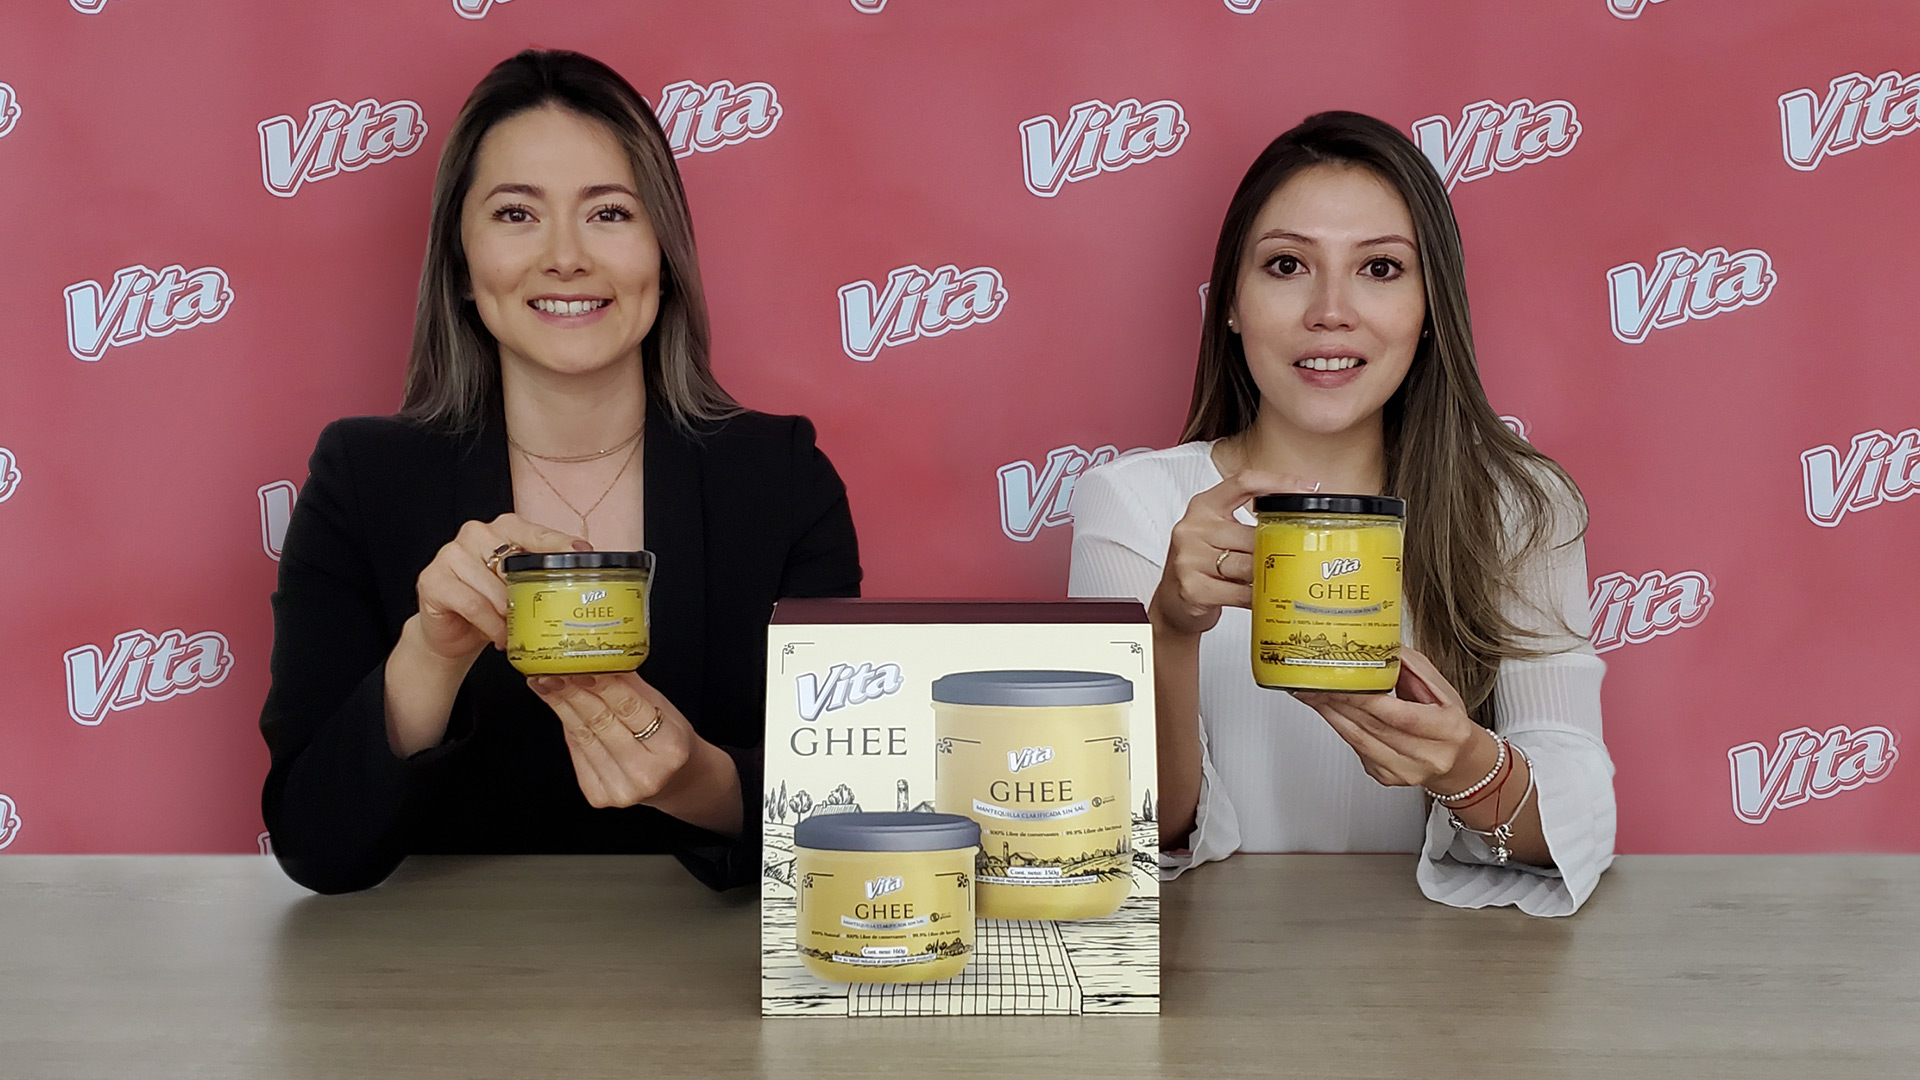 Vita presenta nueva mantequilla: Vita Ghee